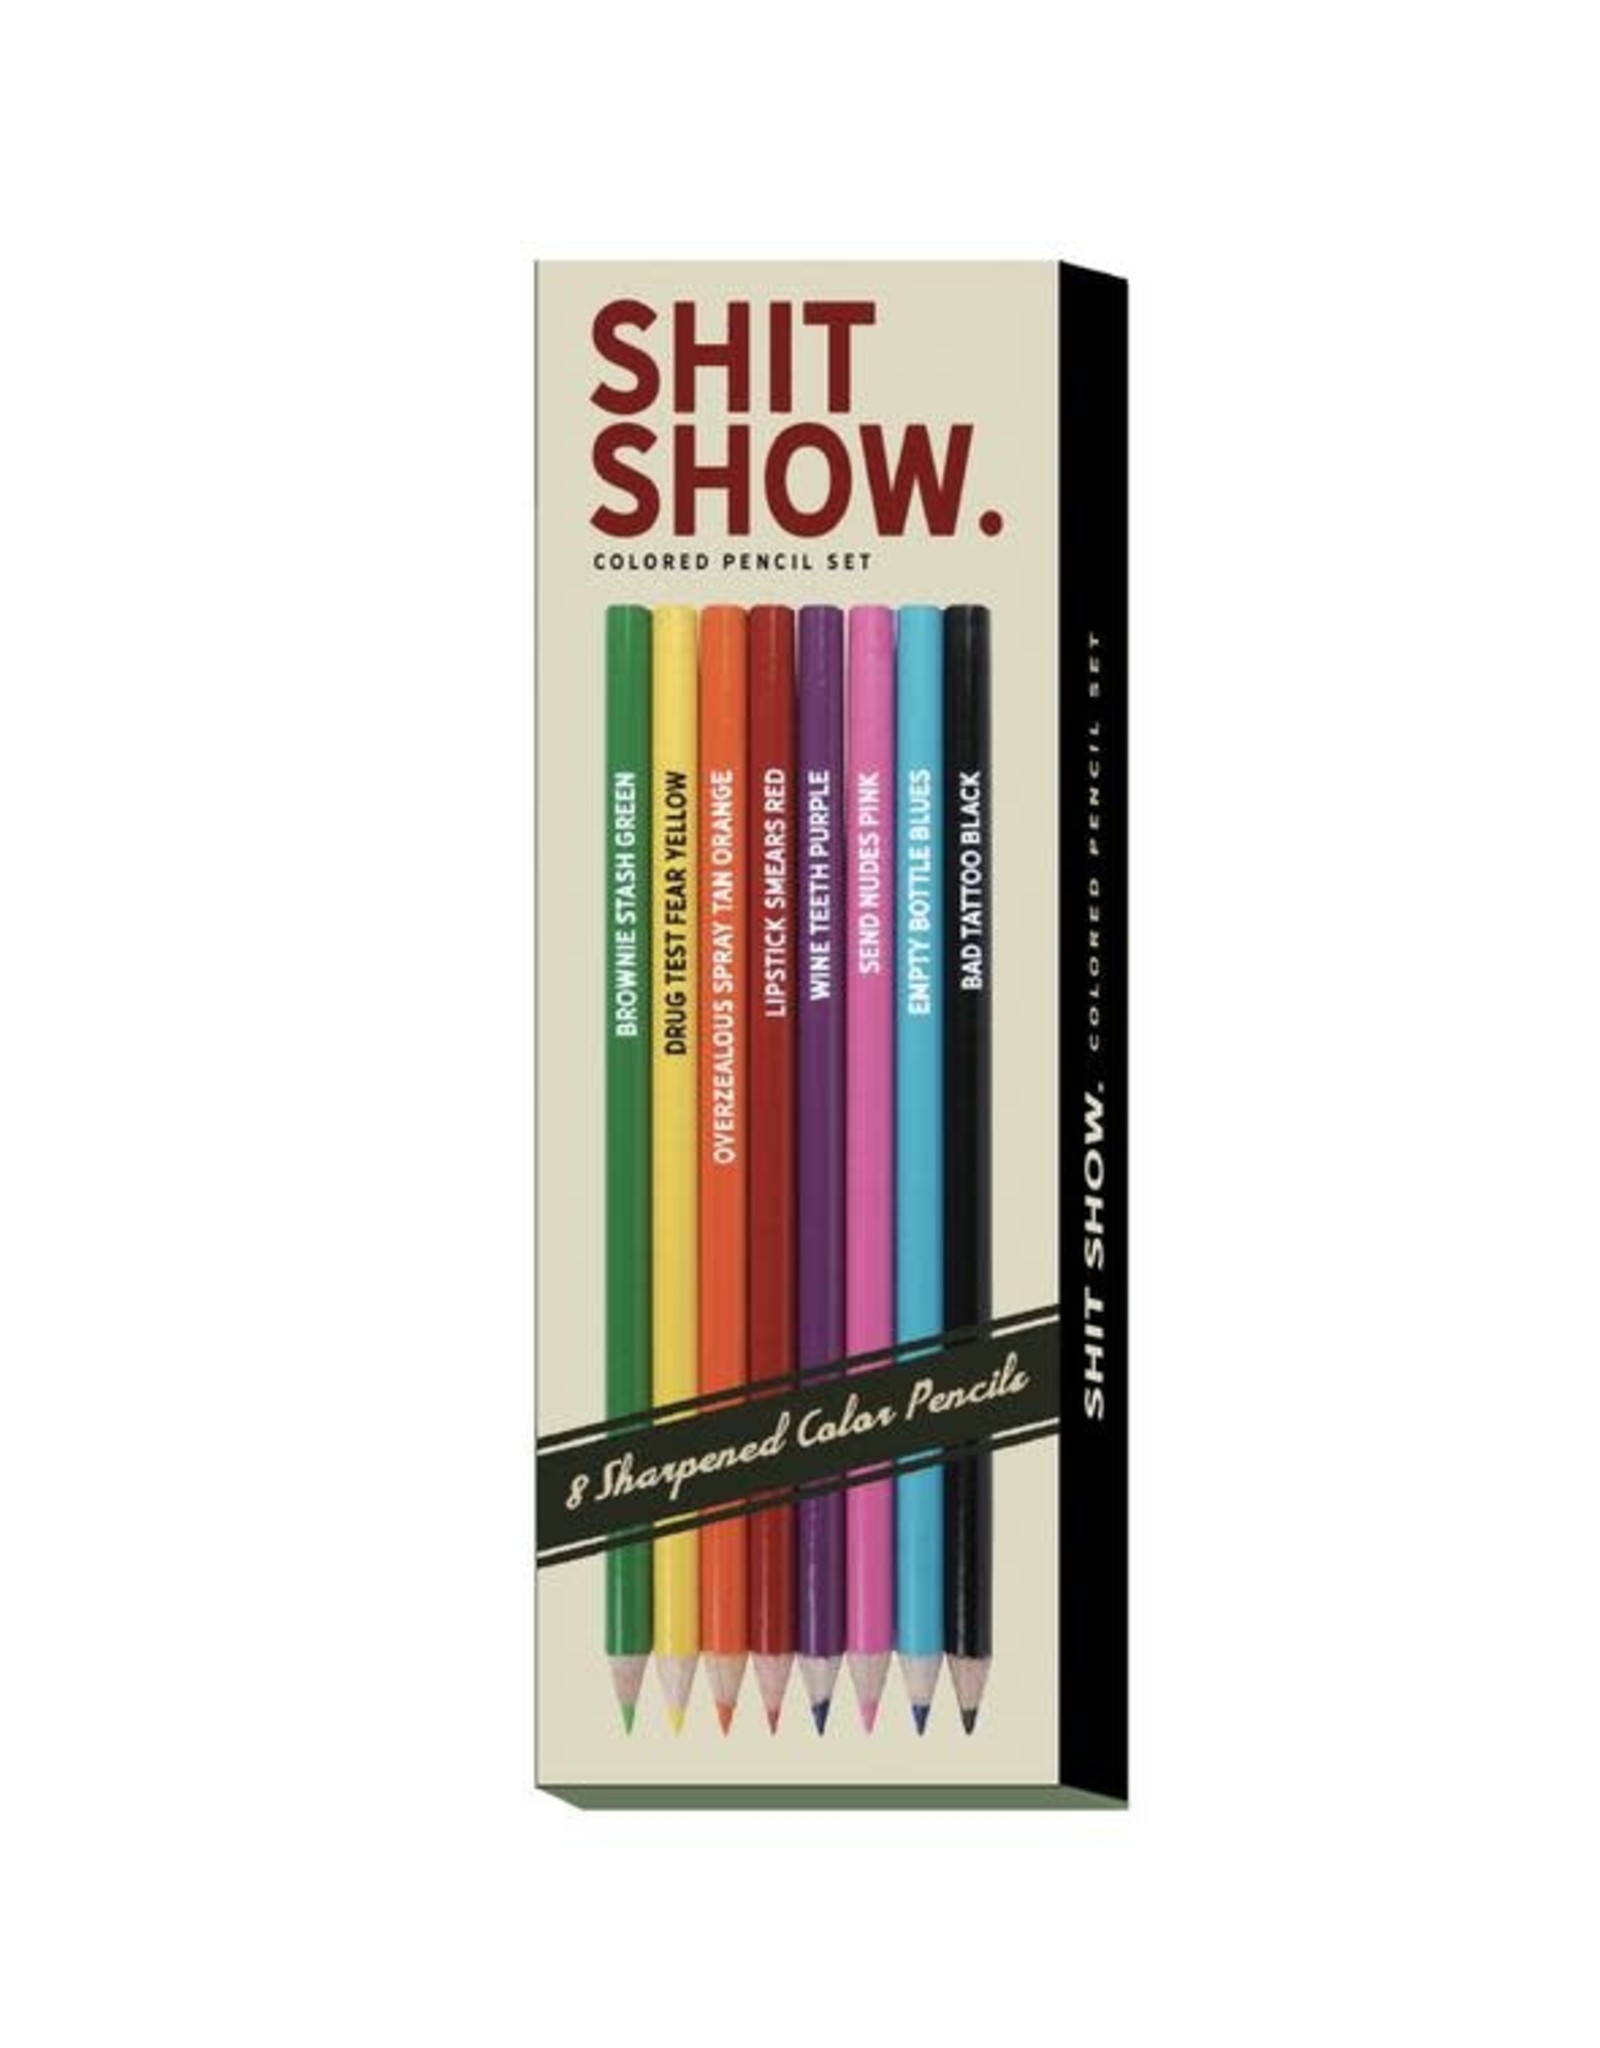 WER - Coloured Pencils (8) / Shit Show